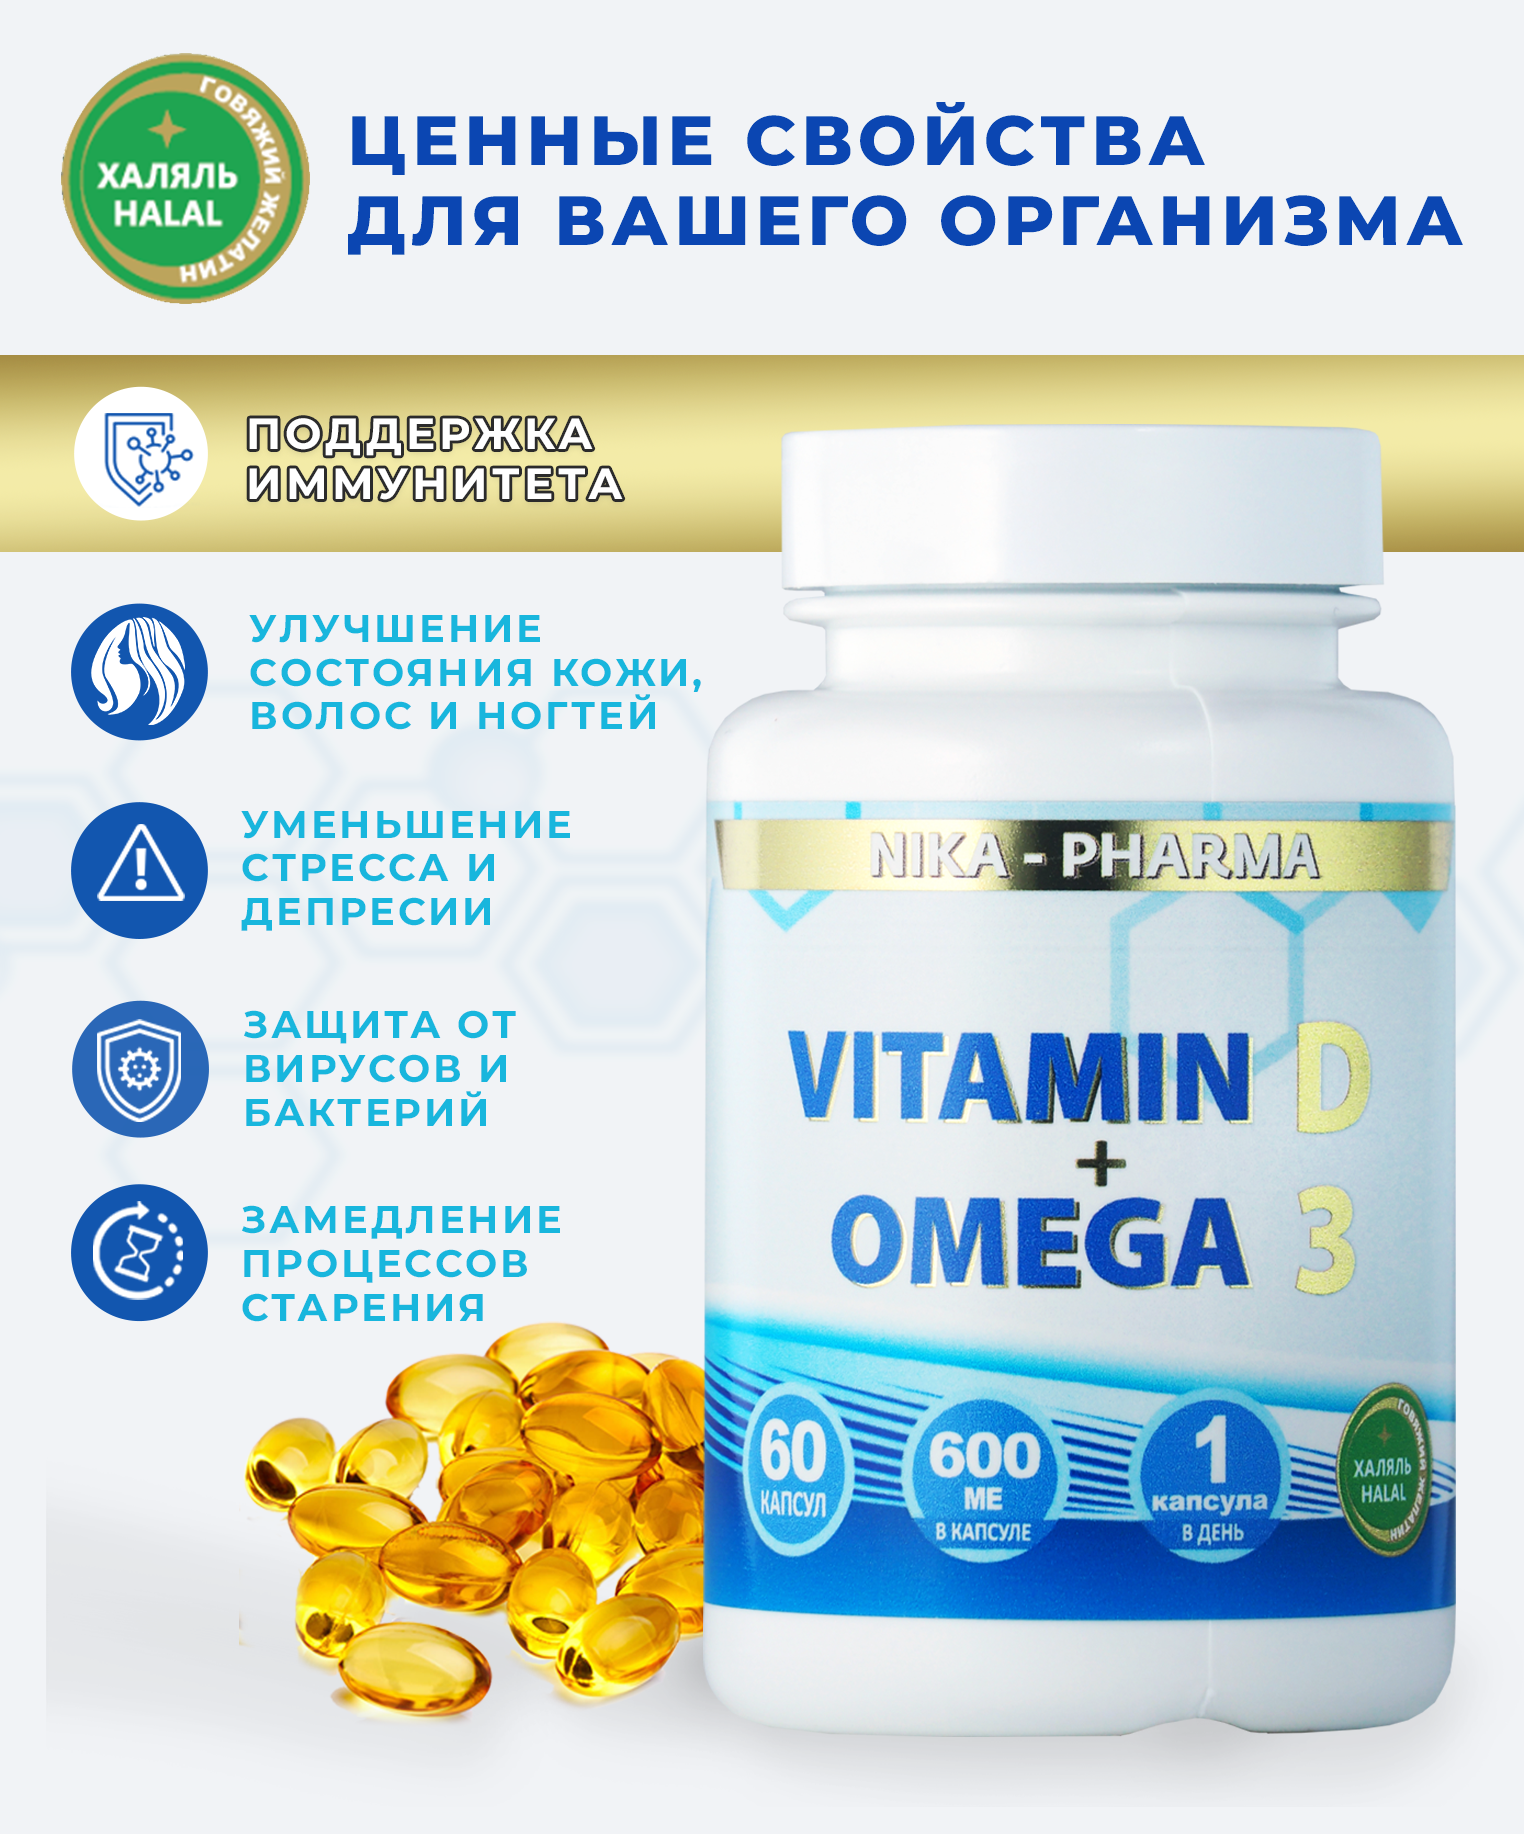 Витамин Д + Омега 3 NIKA-PHARMA Халяль - фото 4